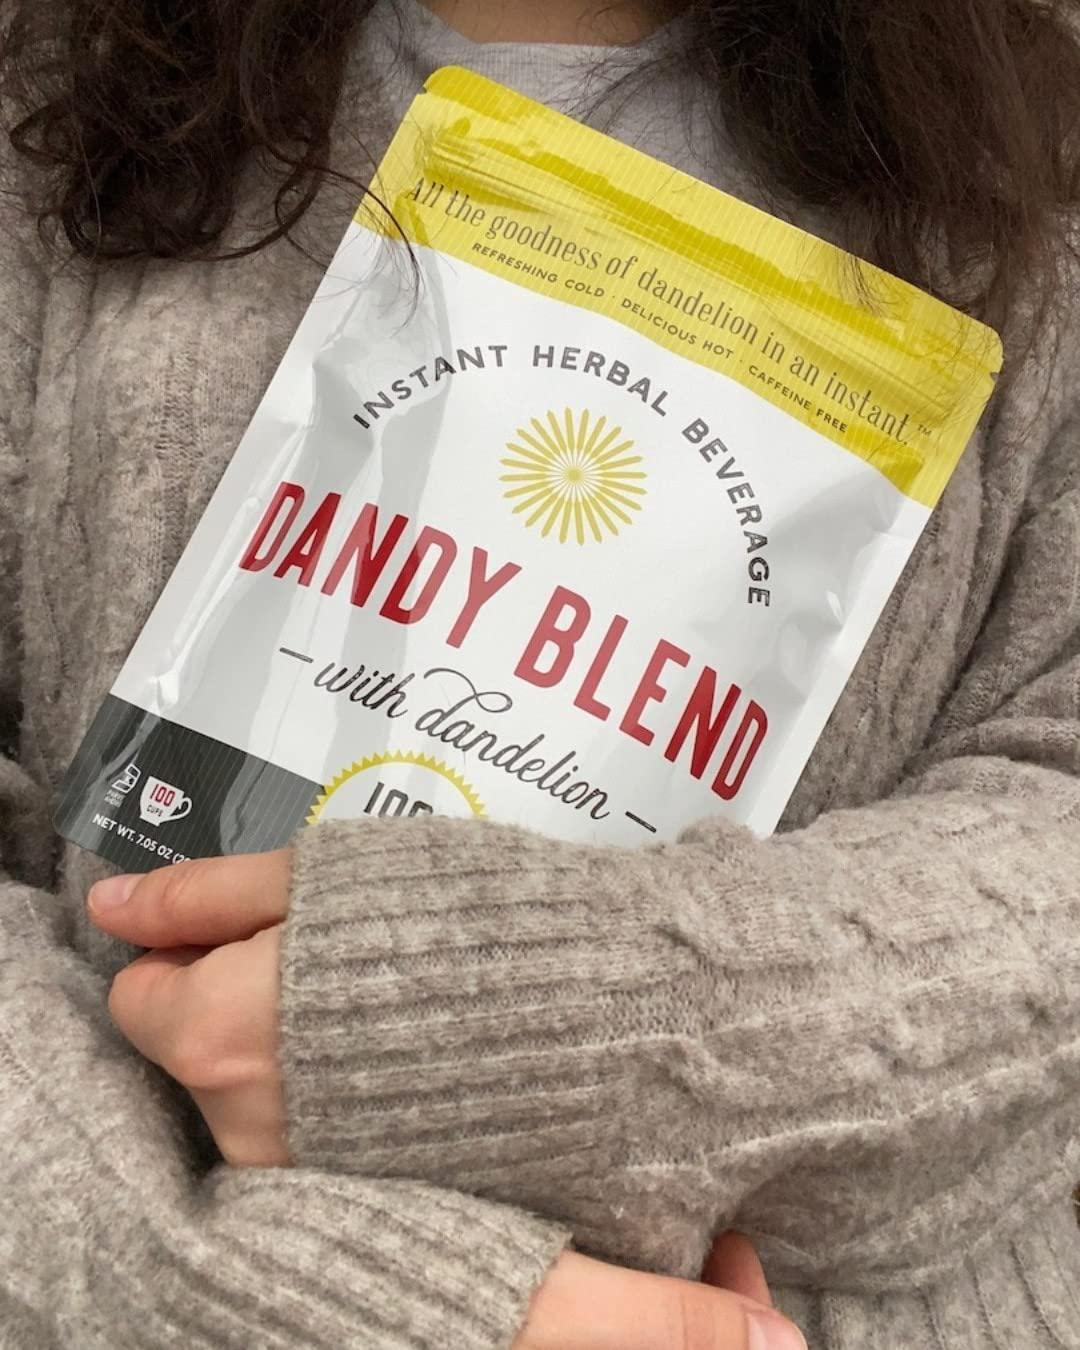 Dandy Blend Instant Herbal Beverage with Dandelion, 14.1 oz